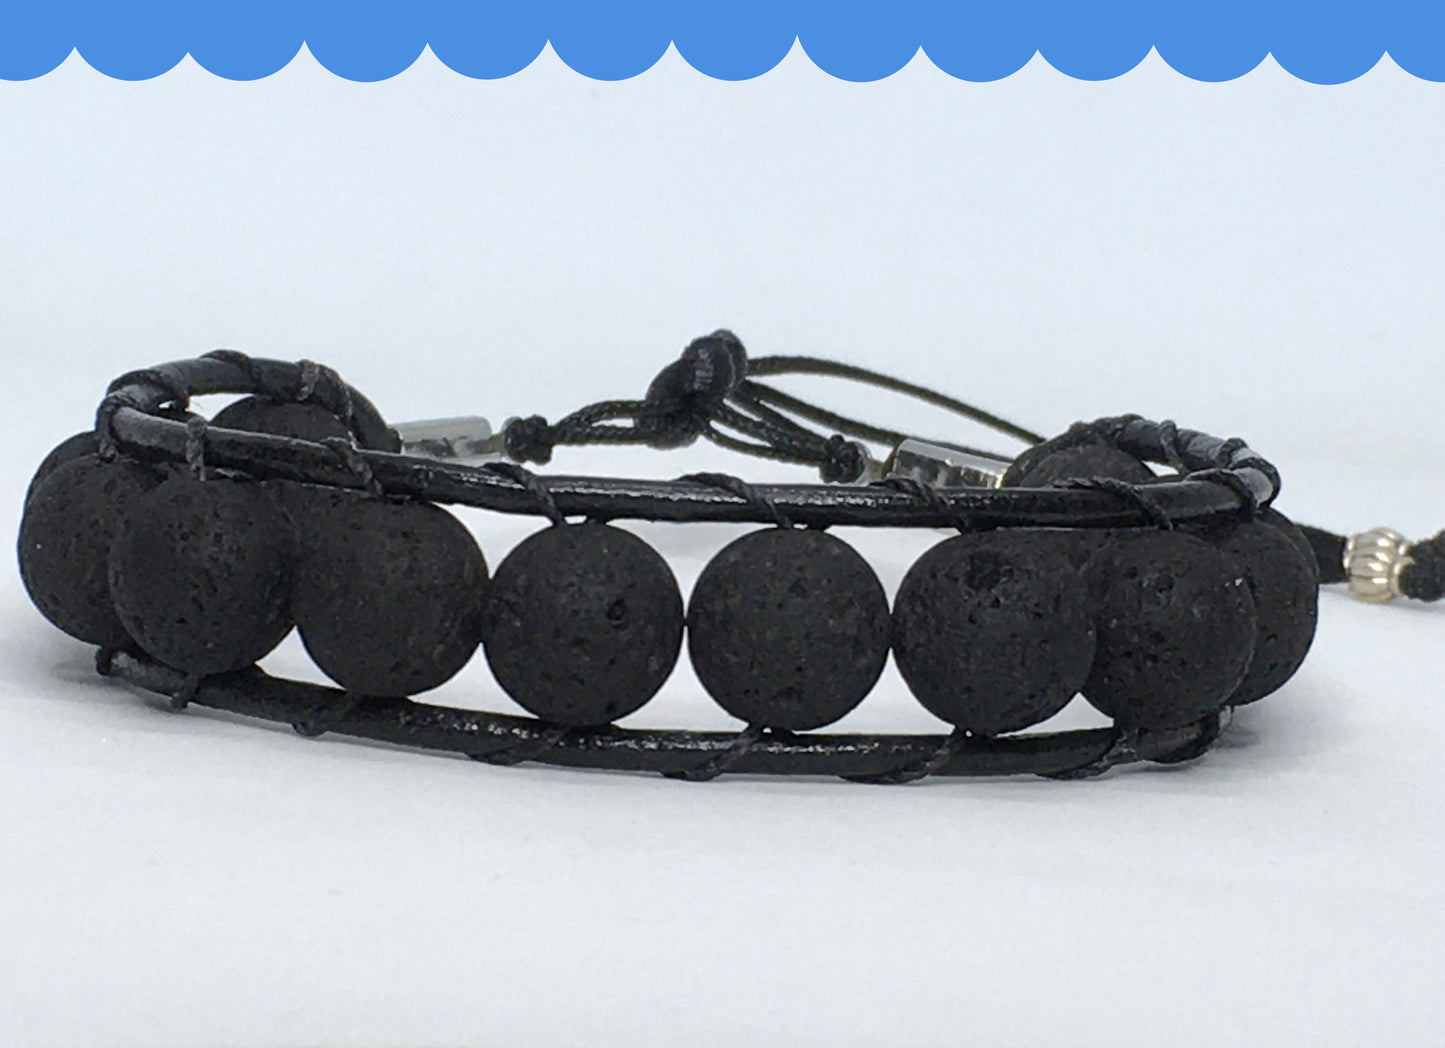 6.75" Black Lava Men's Bracelet